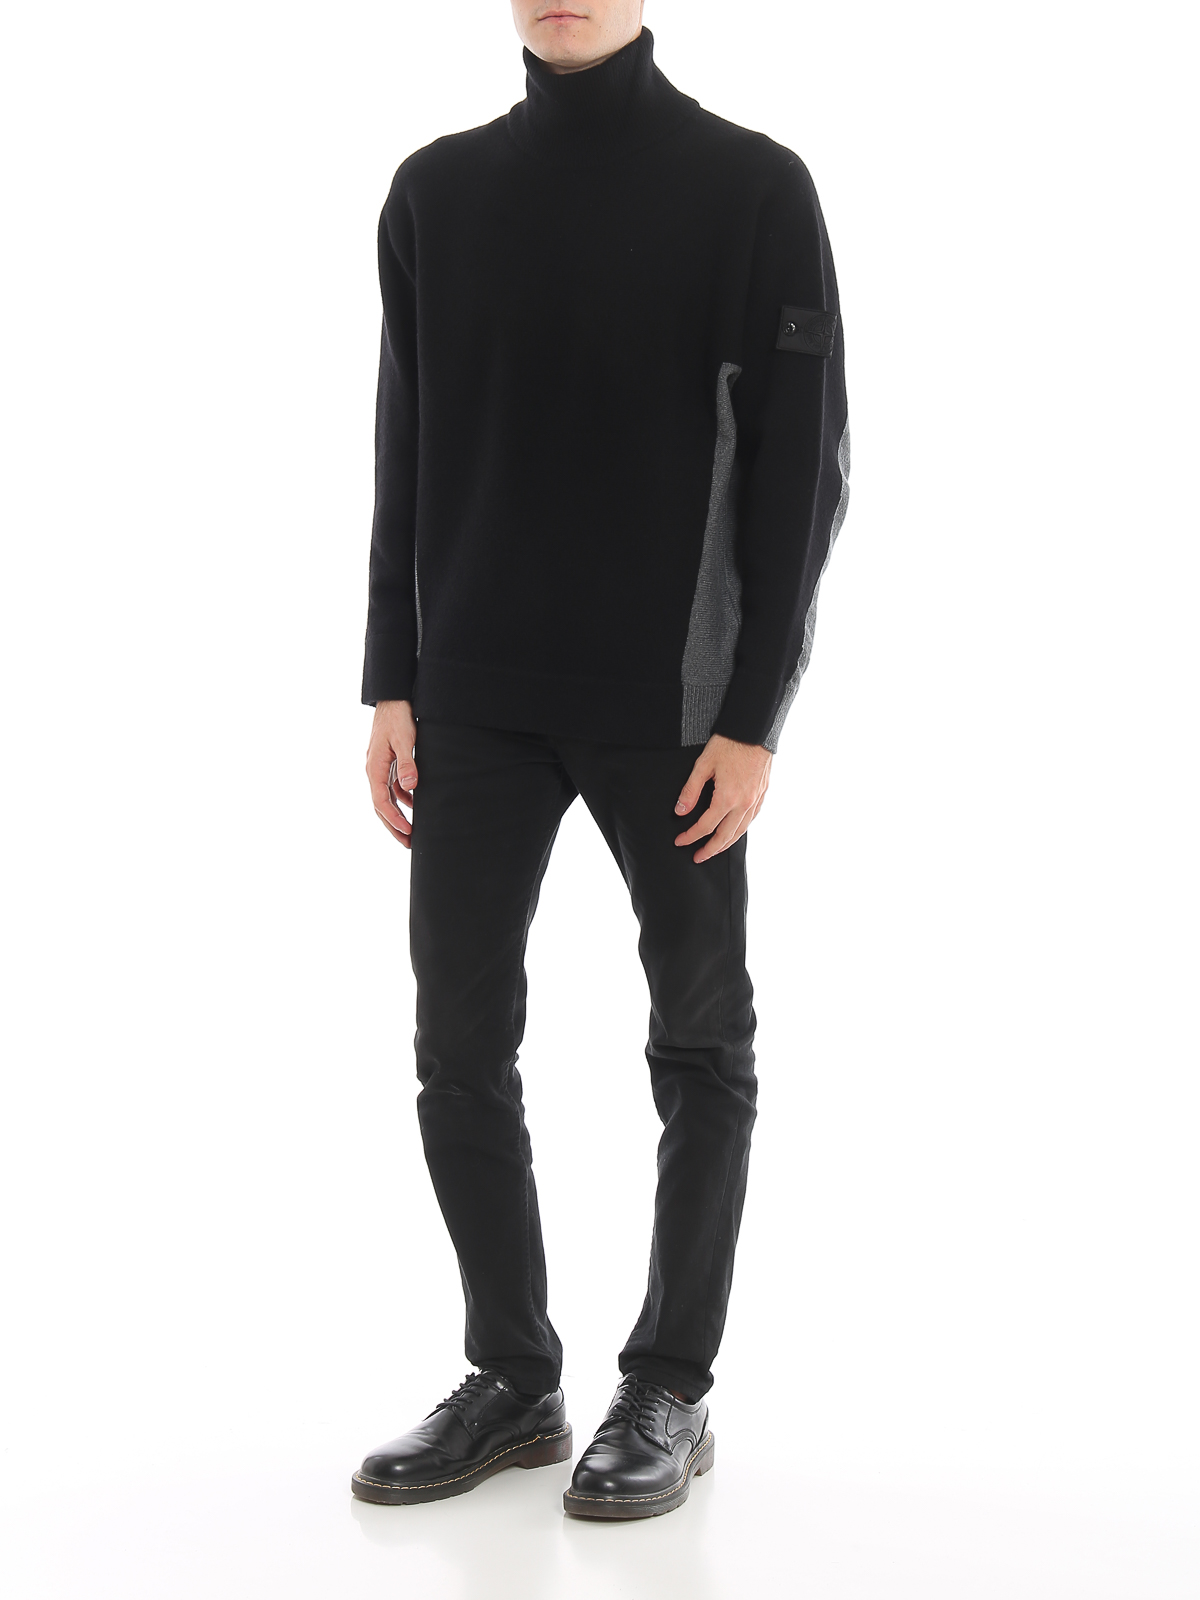 Knit-Woven Hybrid Turtleneck Sweater, FARIX V1.Y7.02, Black